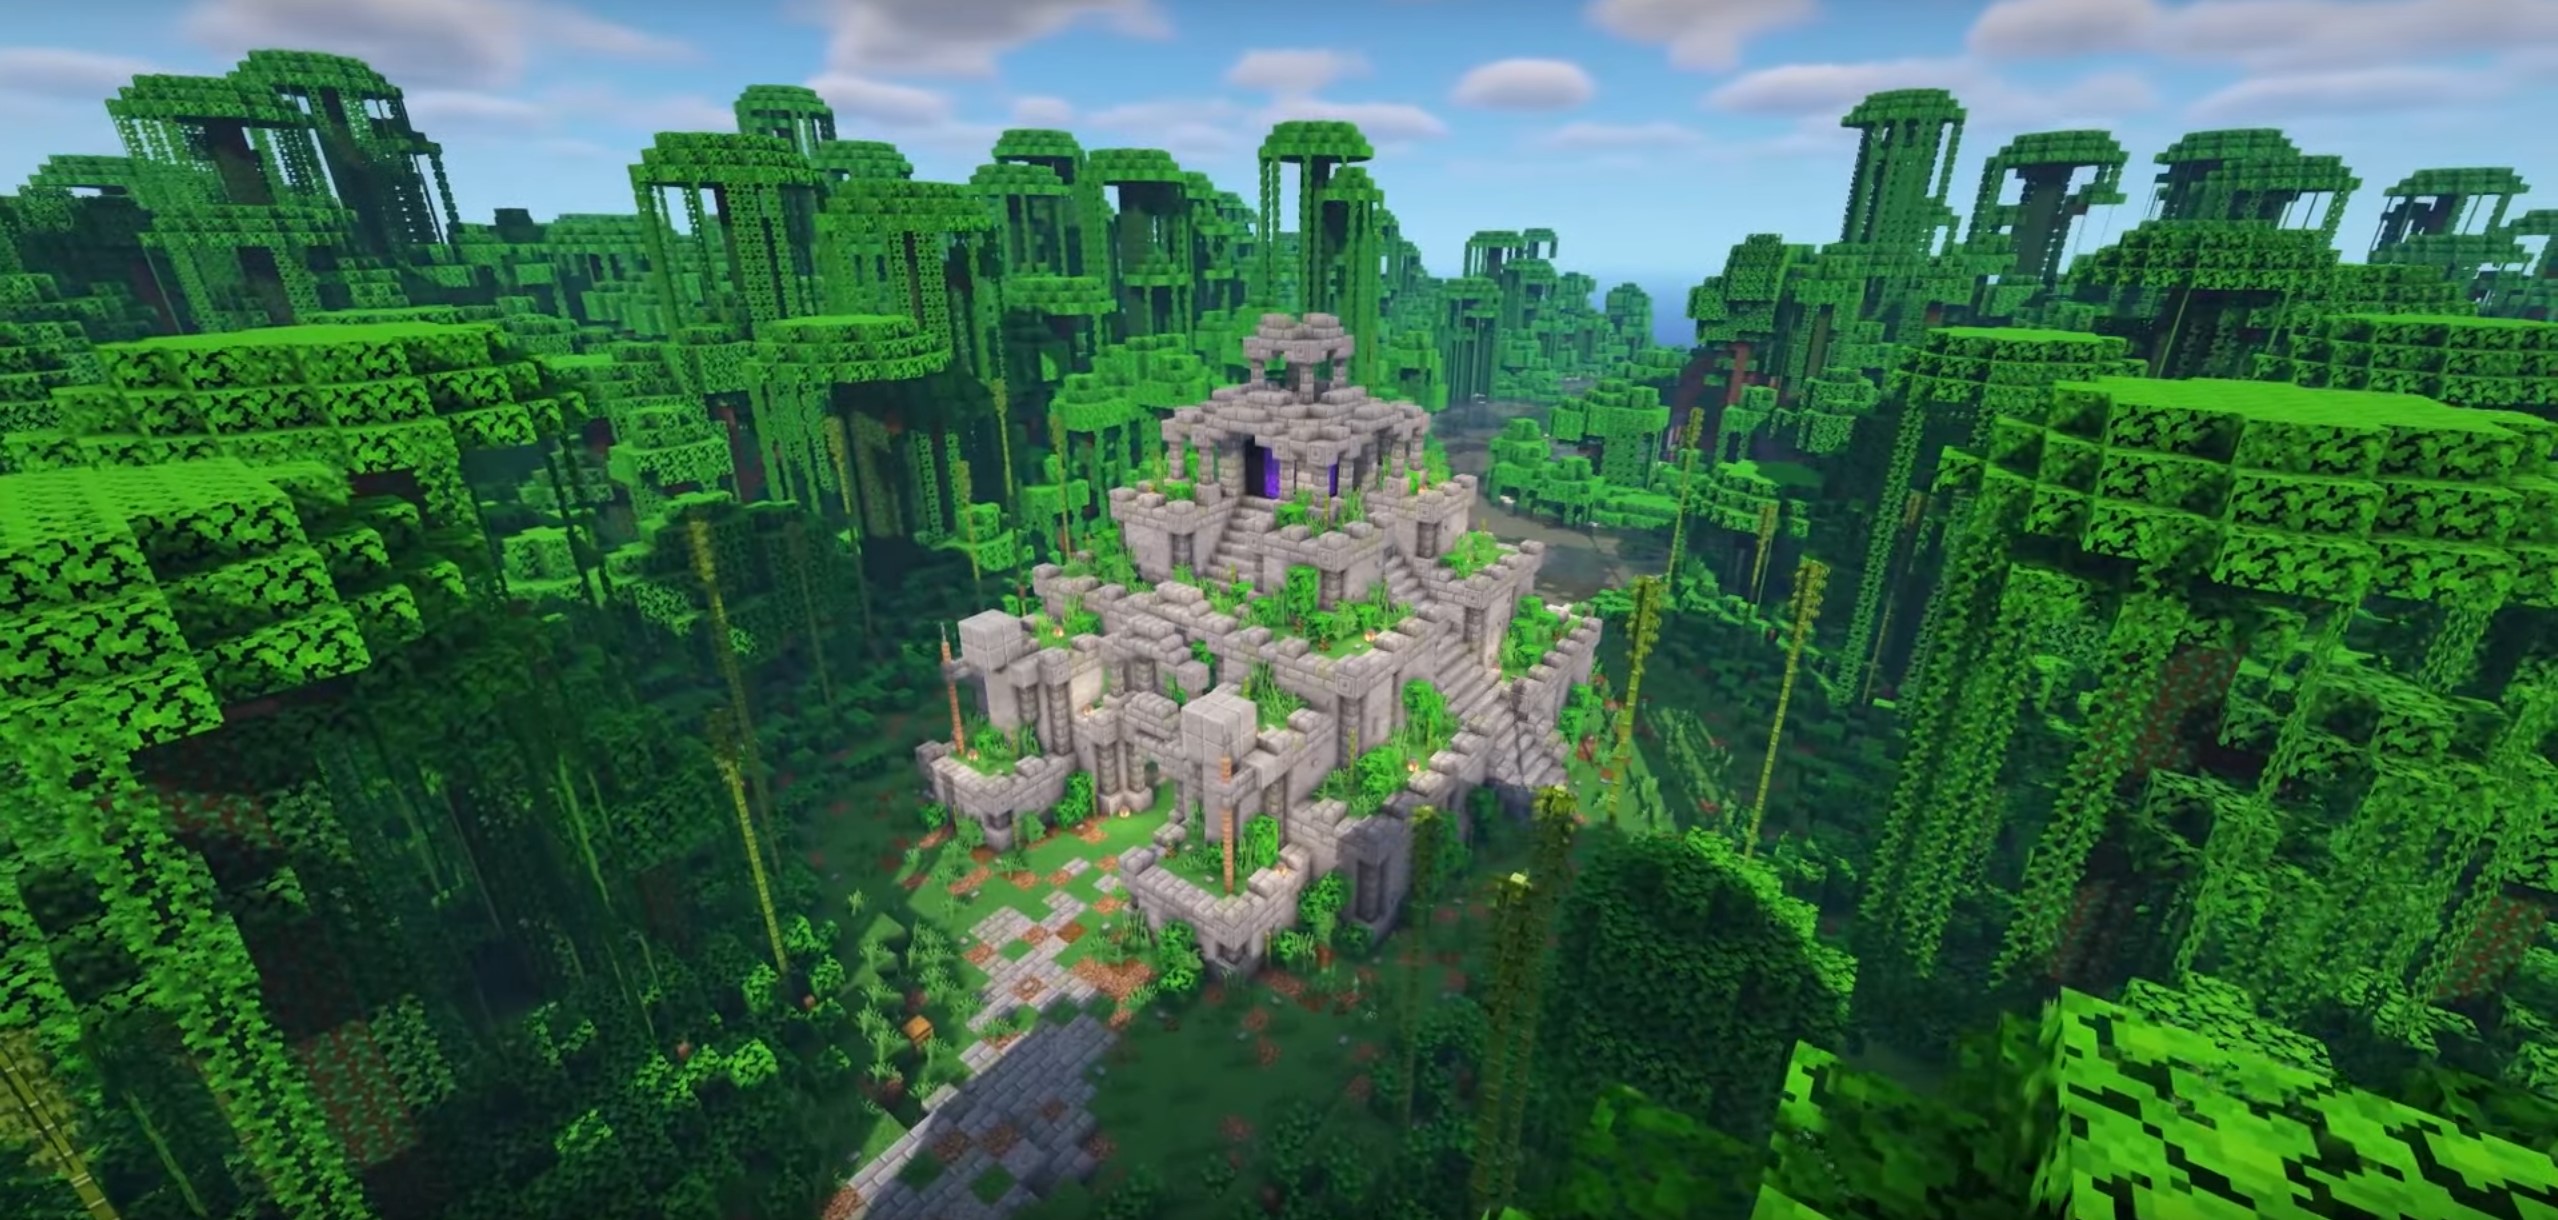 Survival Jungle Temple for 2 Players minecraft building idea